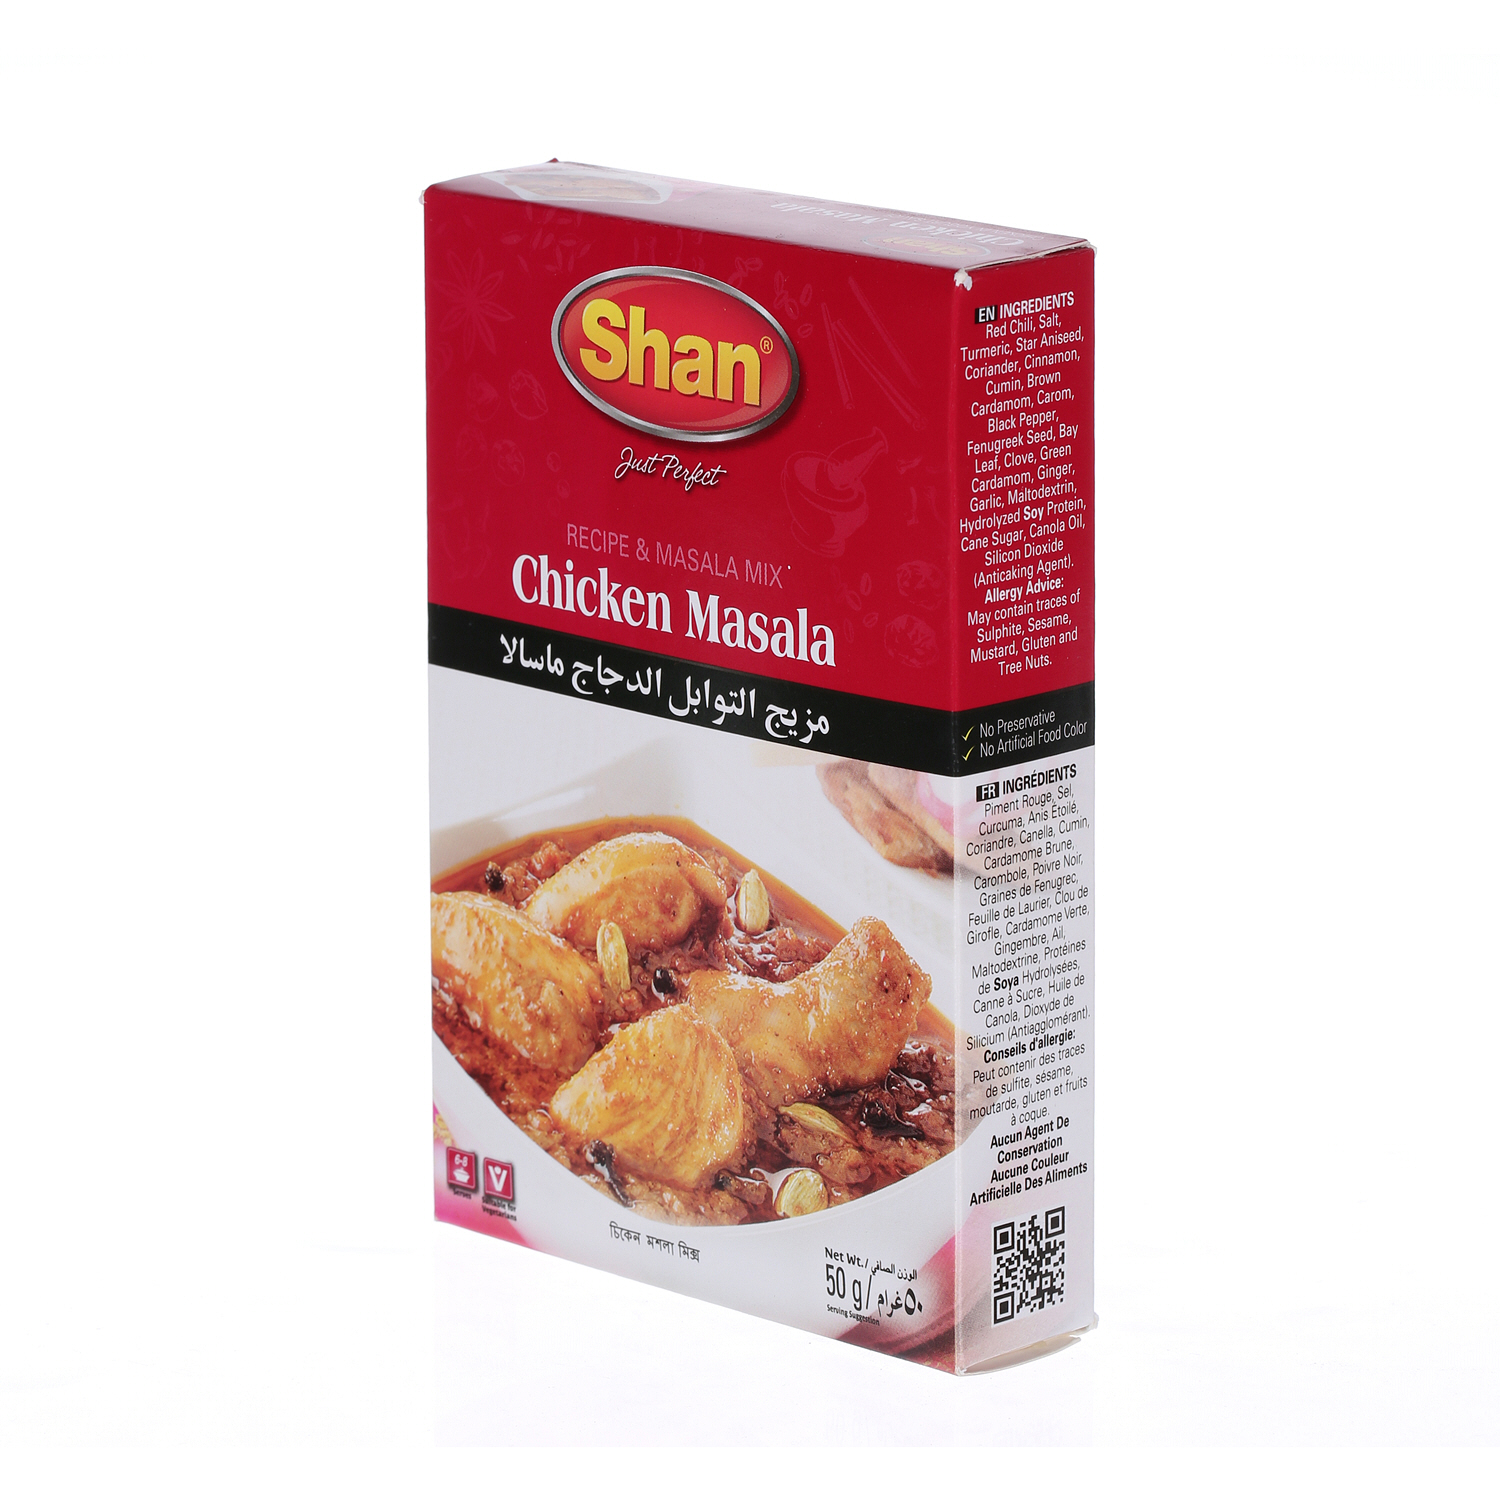 Shan Chicken Masalah 50 g